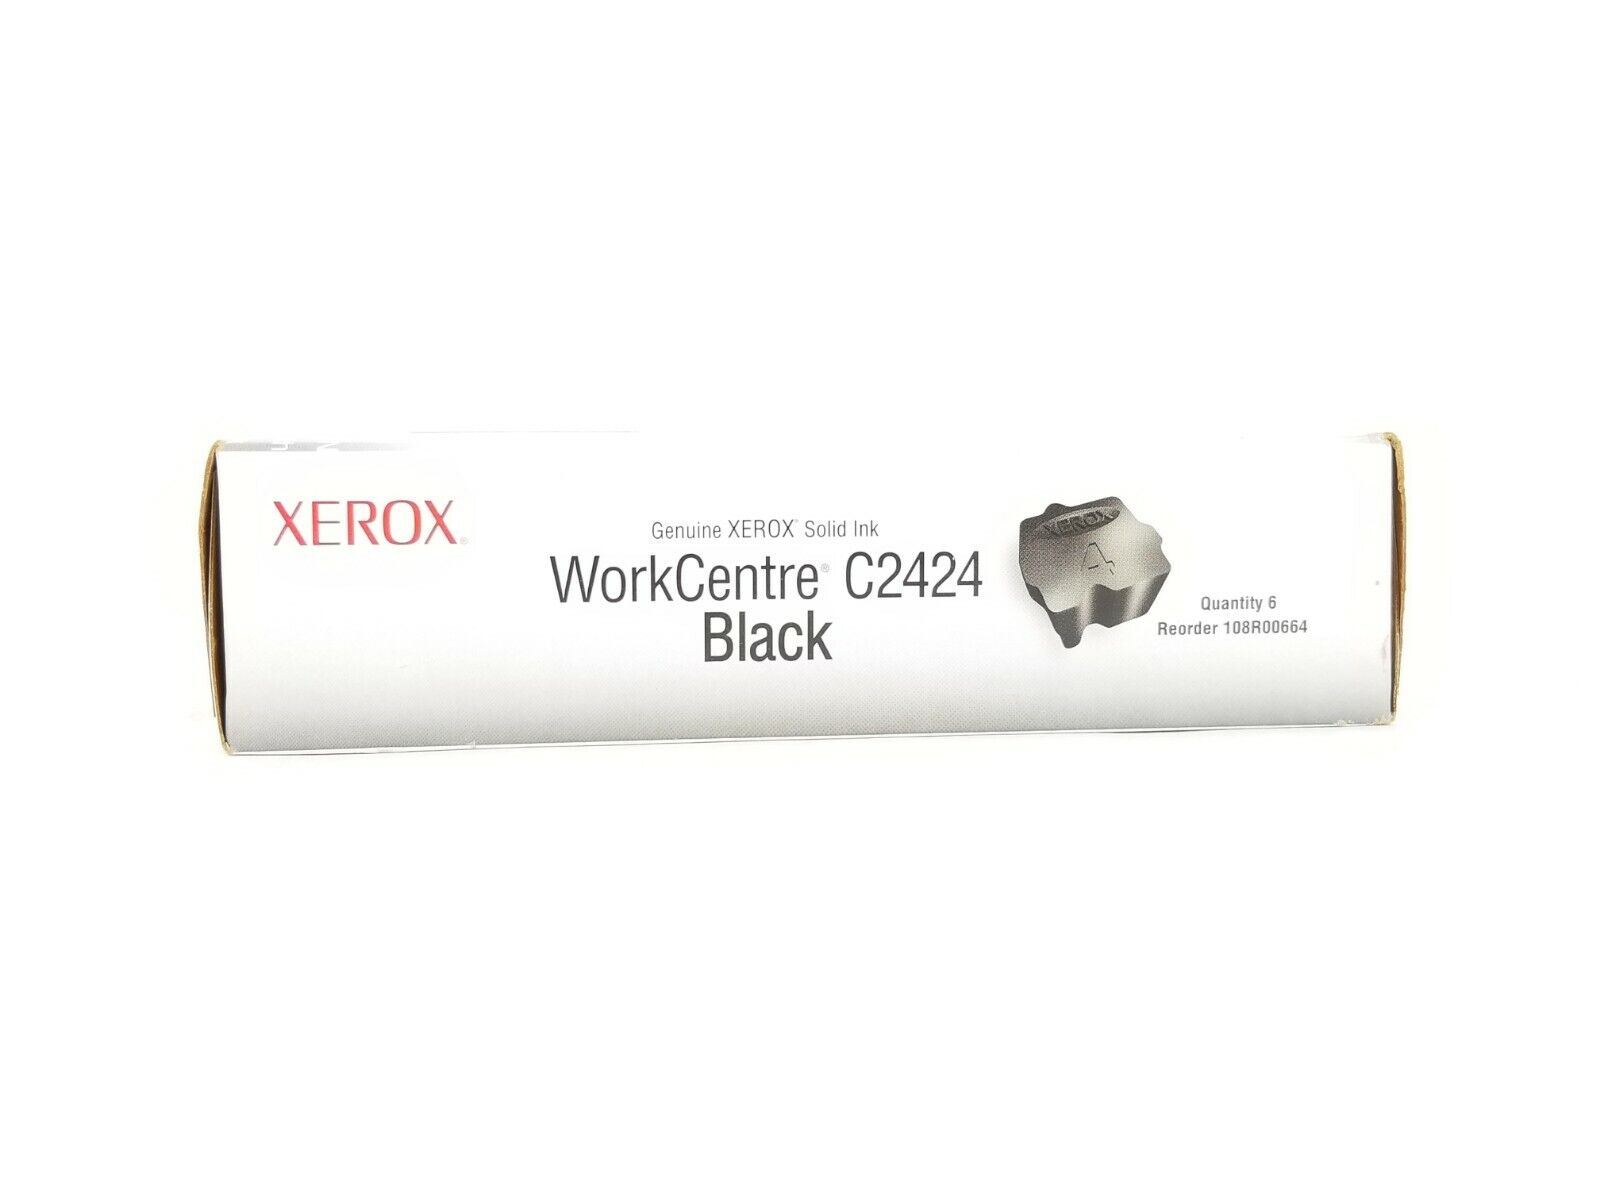 Xerox Black Solid Ink Cartridge WorkCentre C2424 - 6 Pack